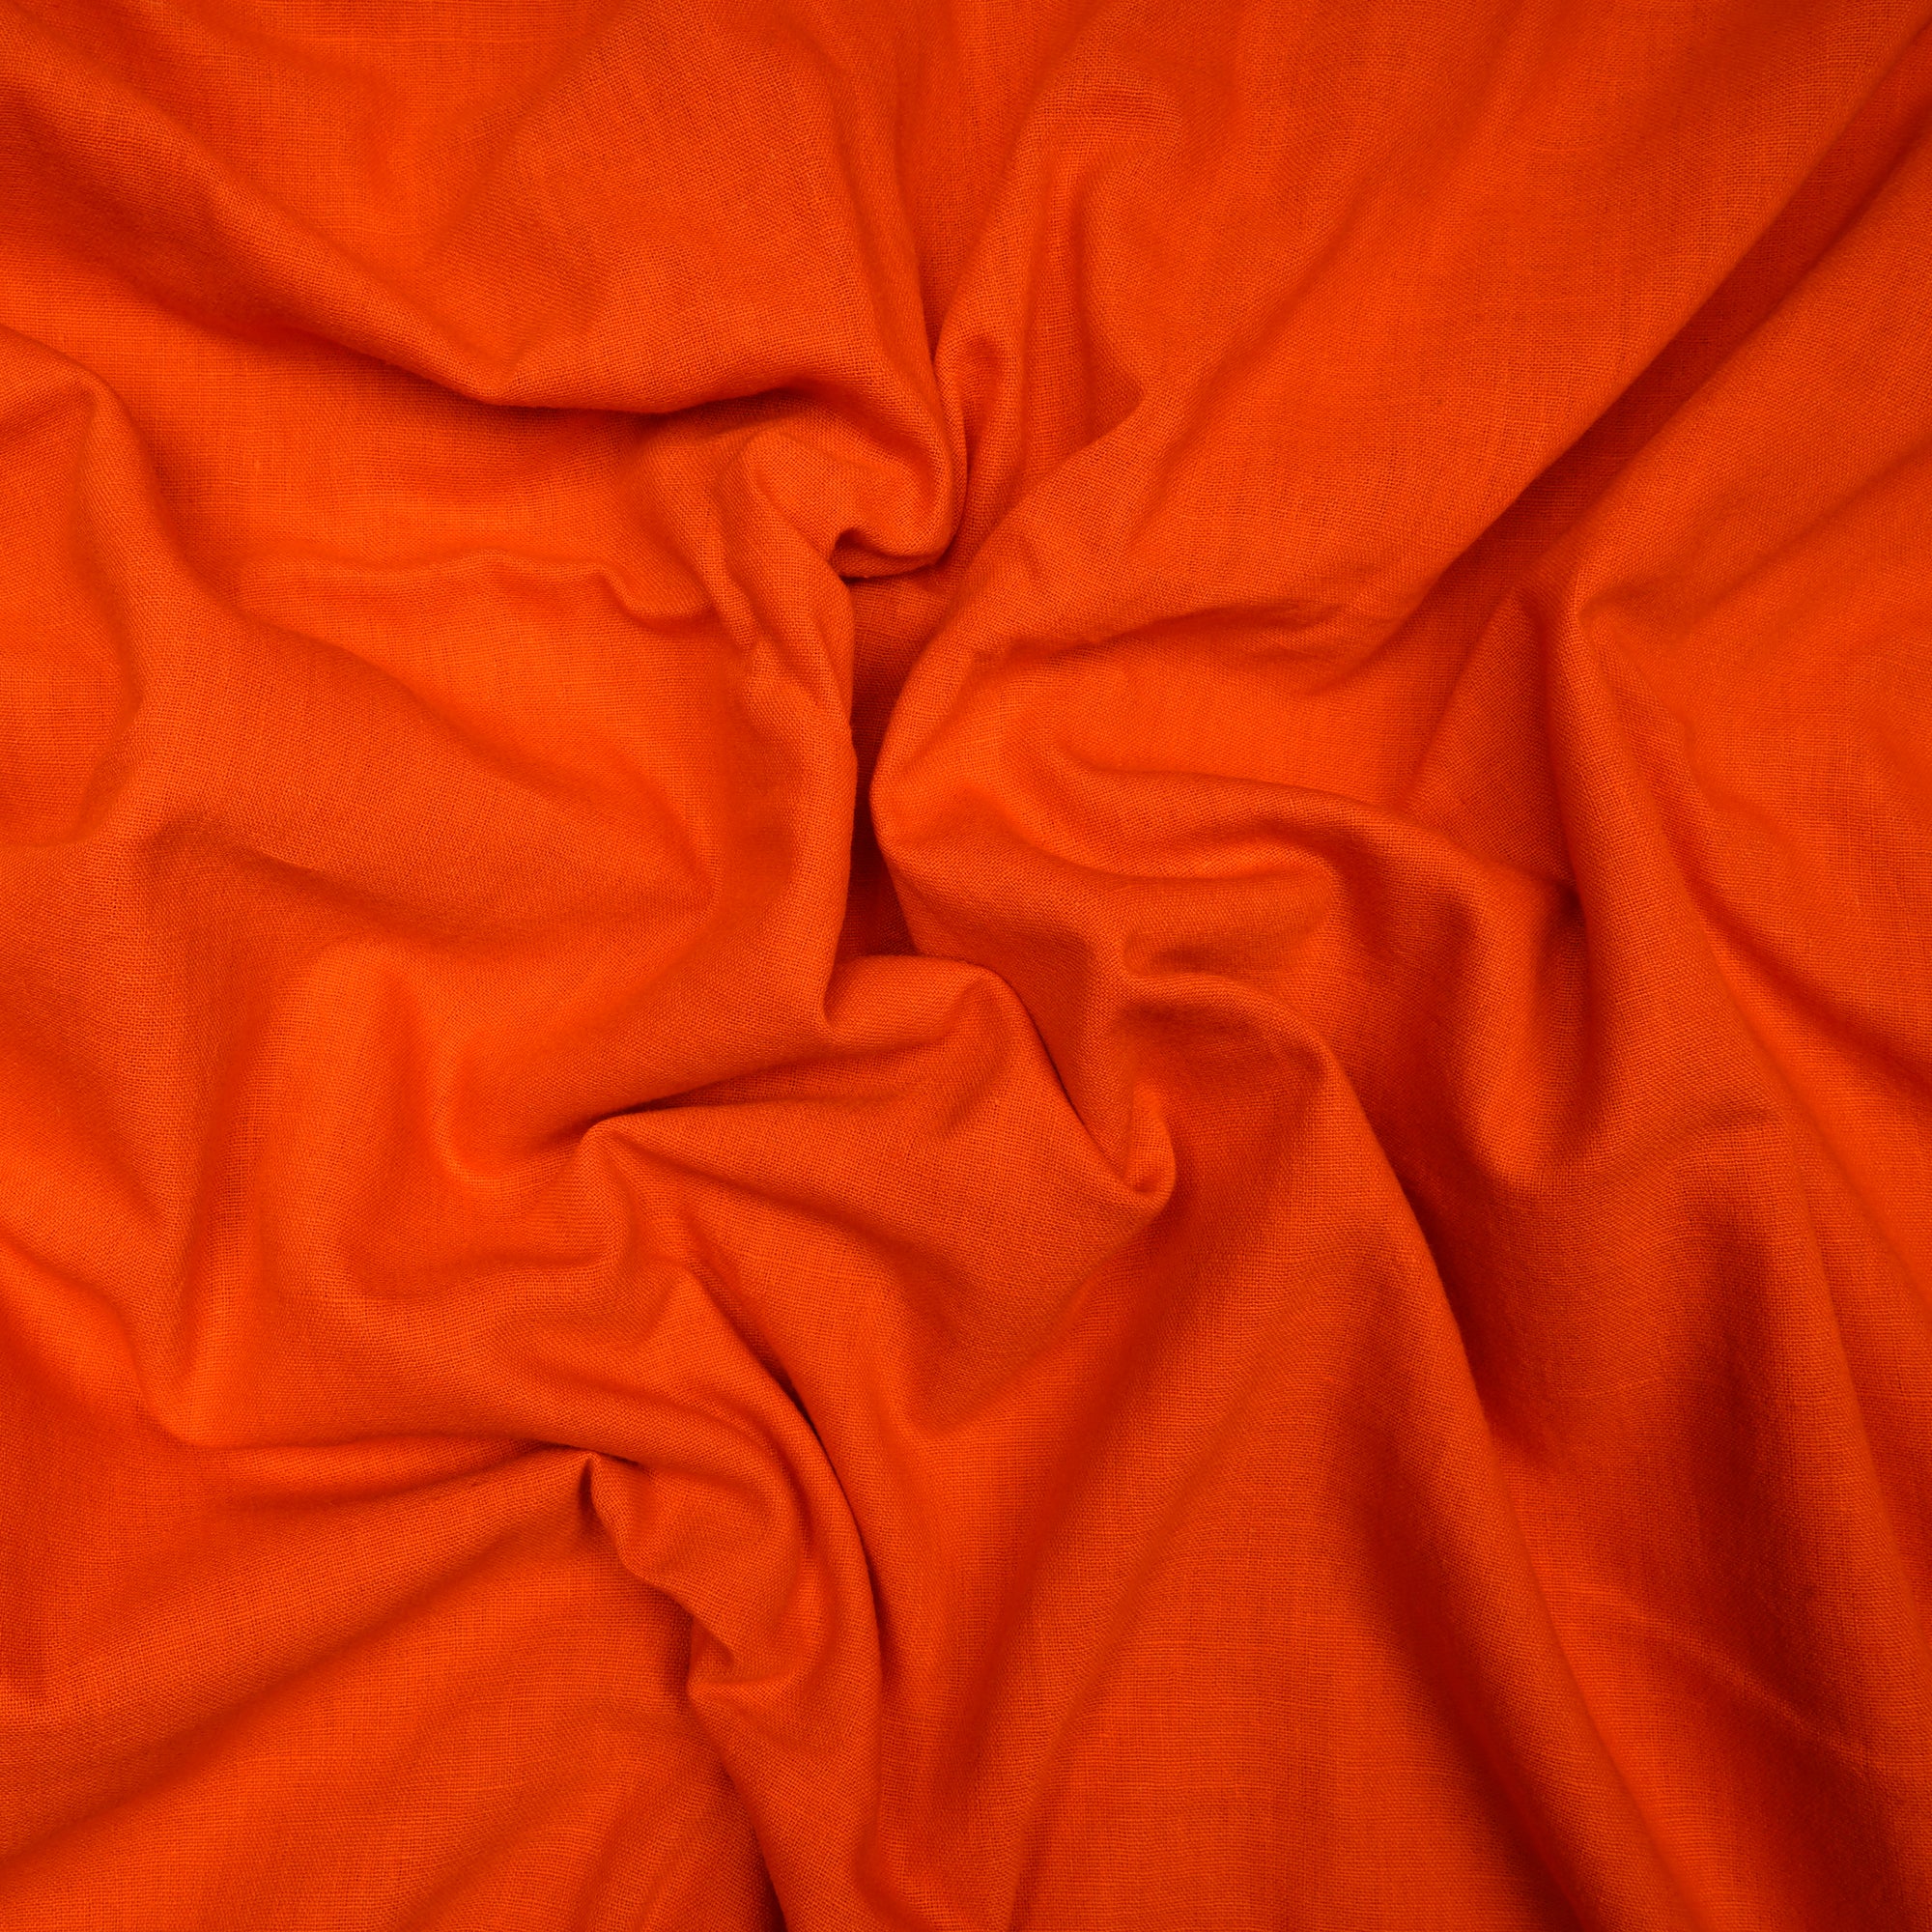 Orange Handwoven Handspun Muslin Cotton Fabric